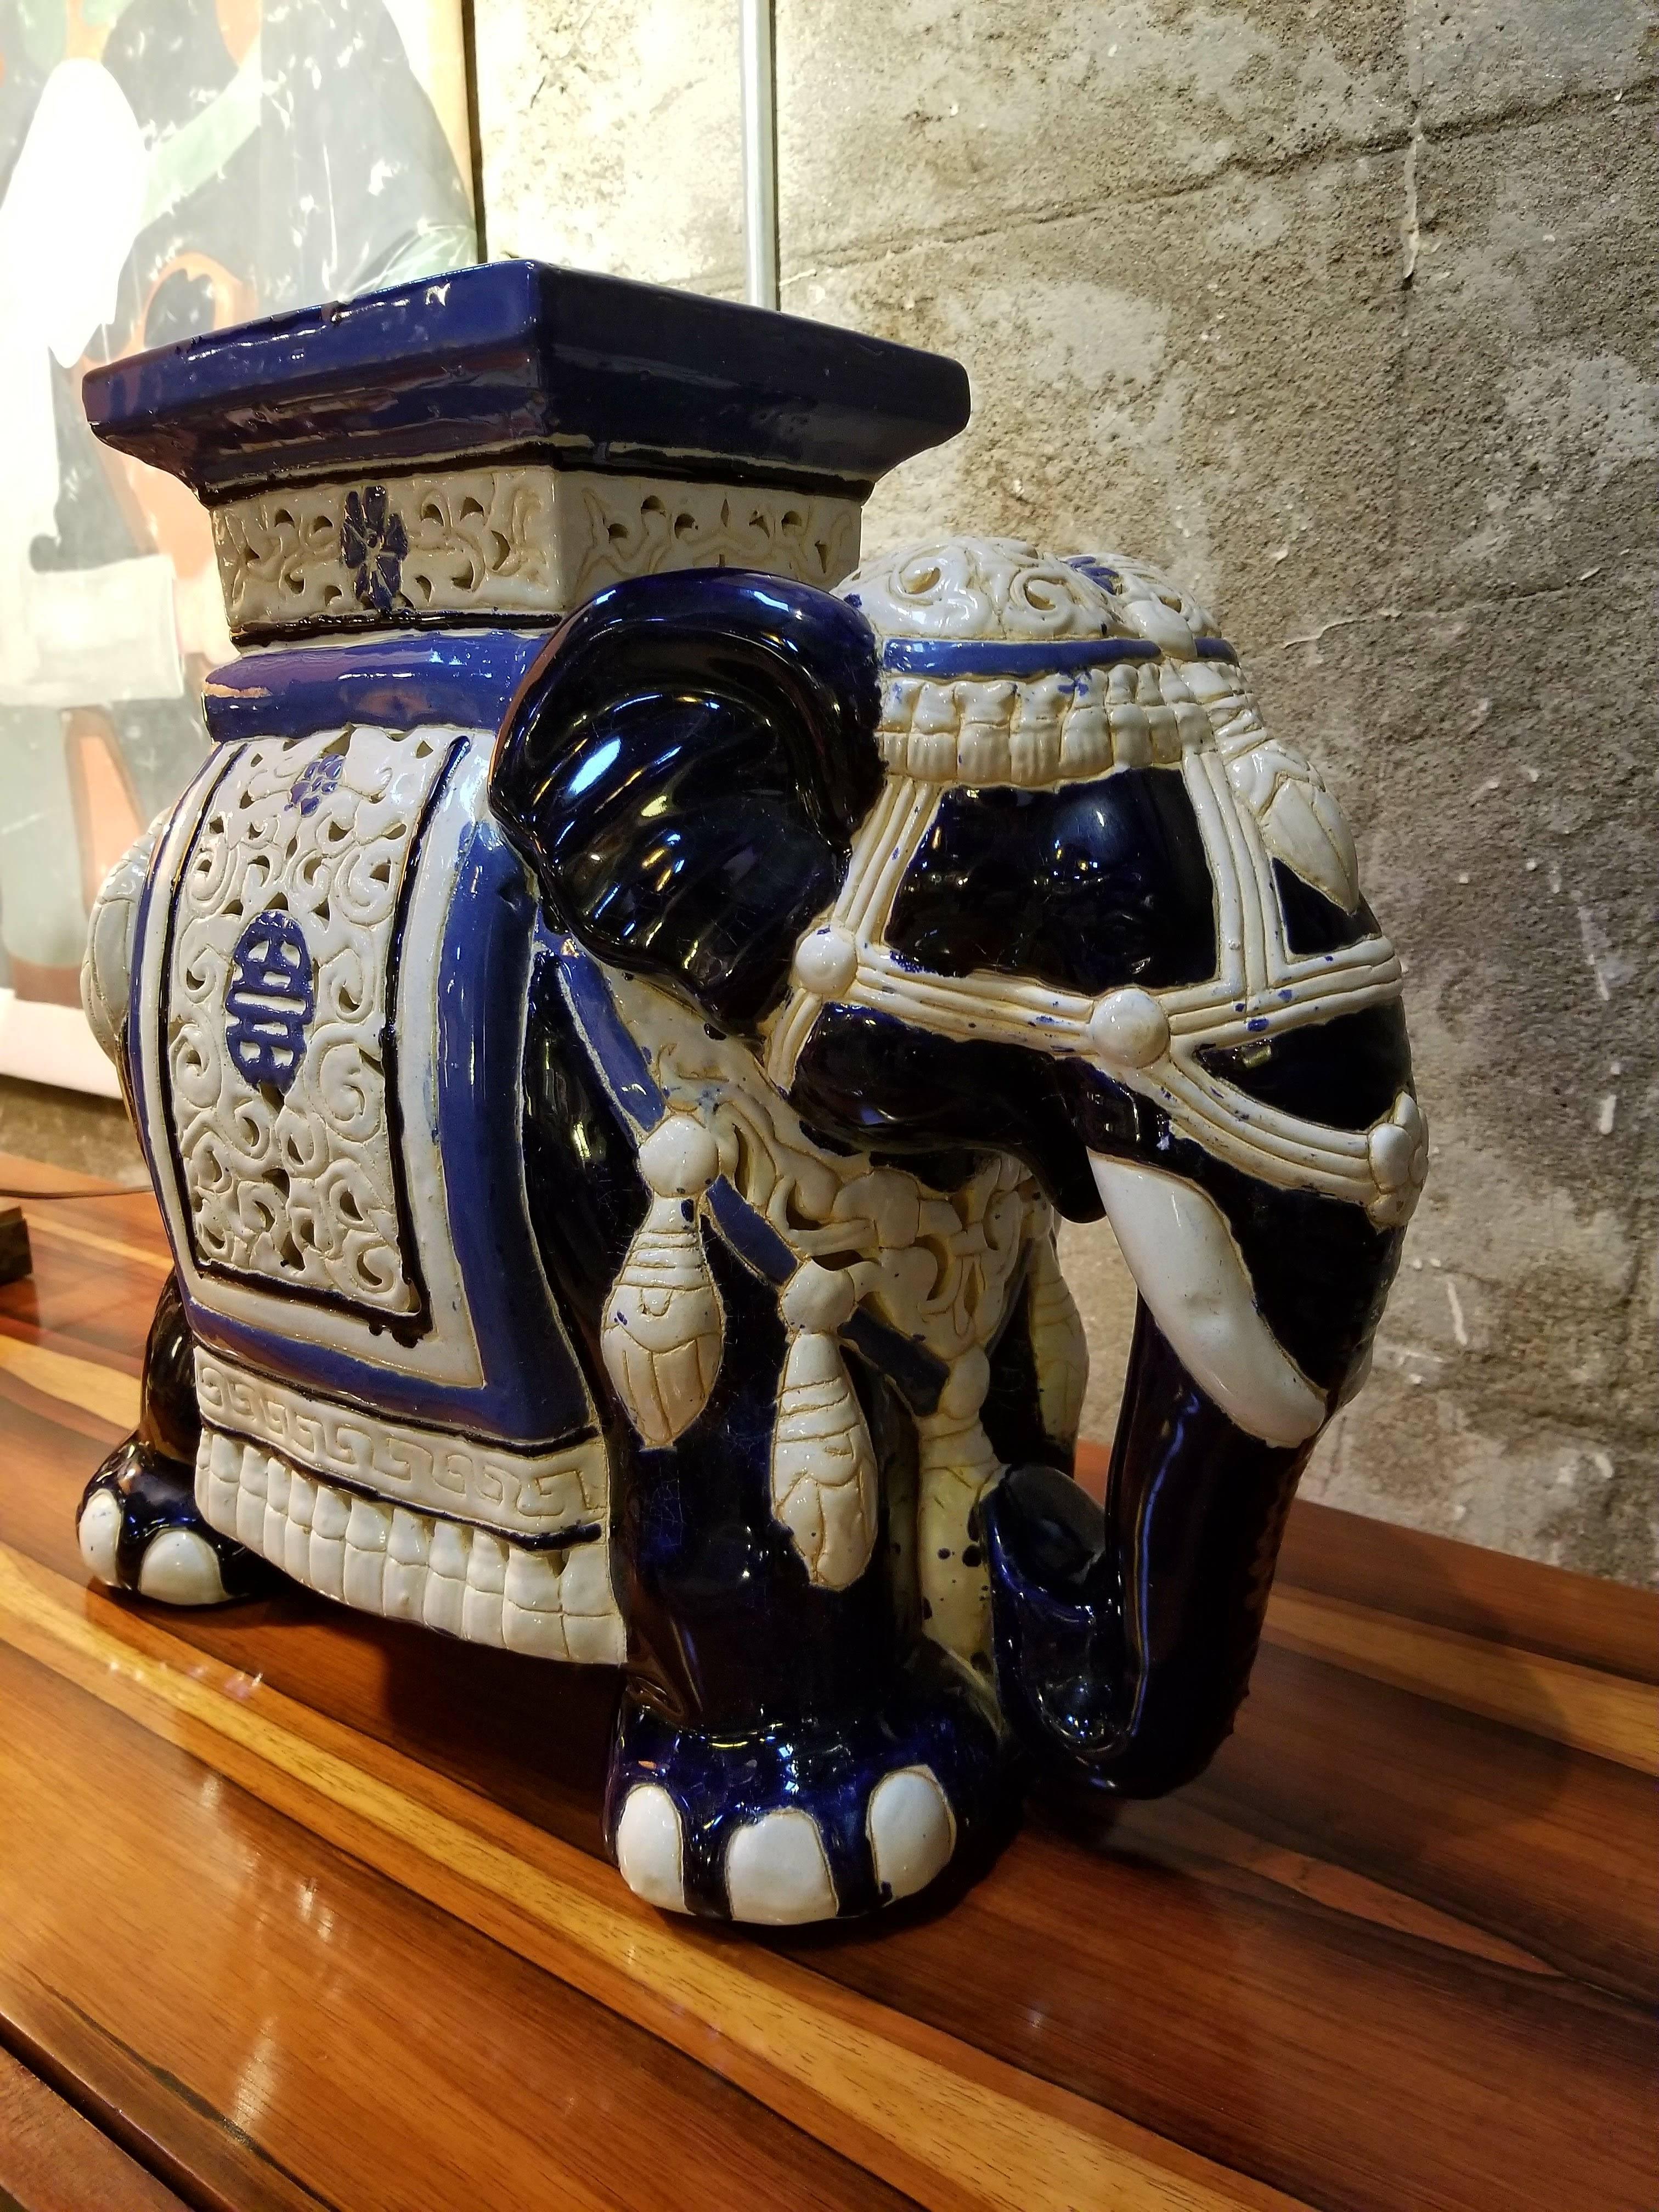 20th Century Ceramic Elephant Garden Stool